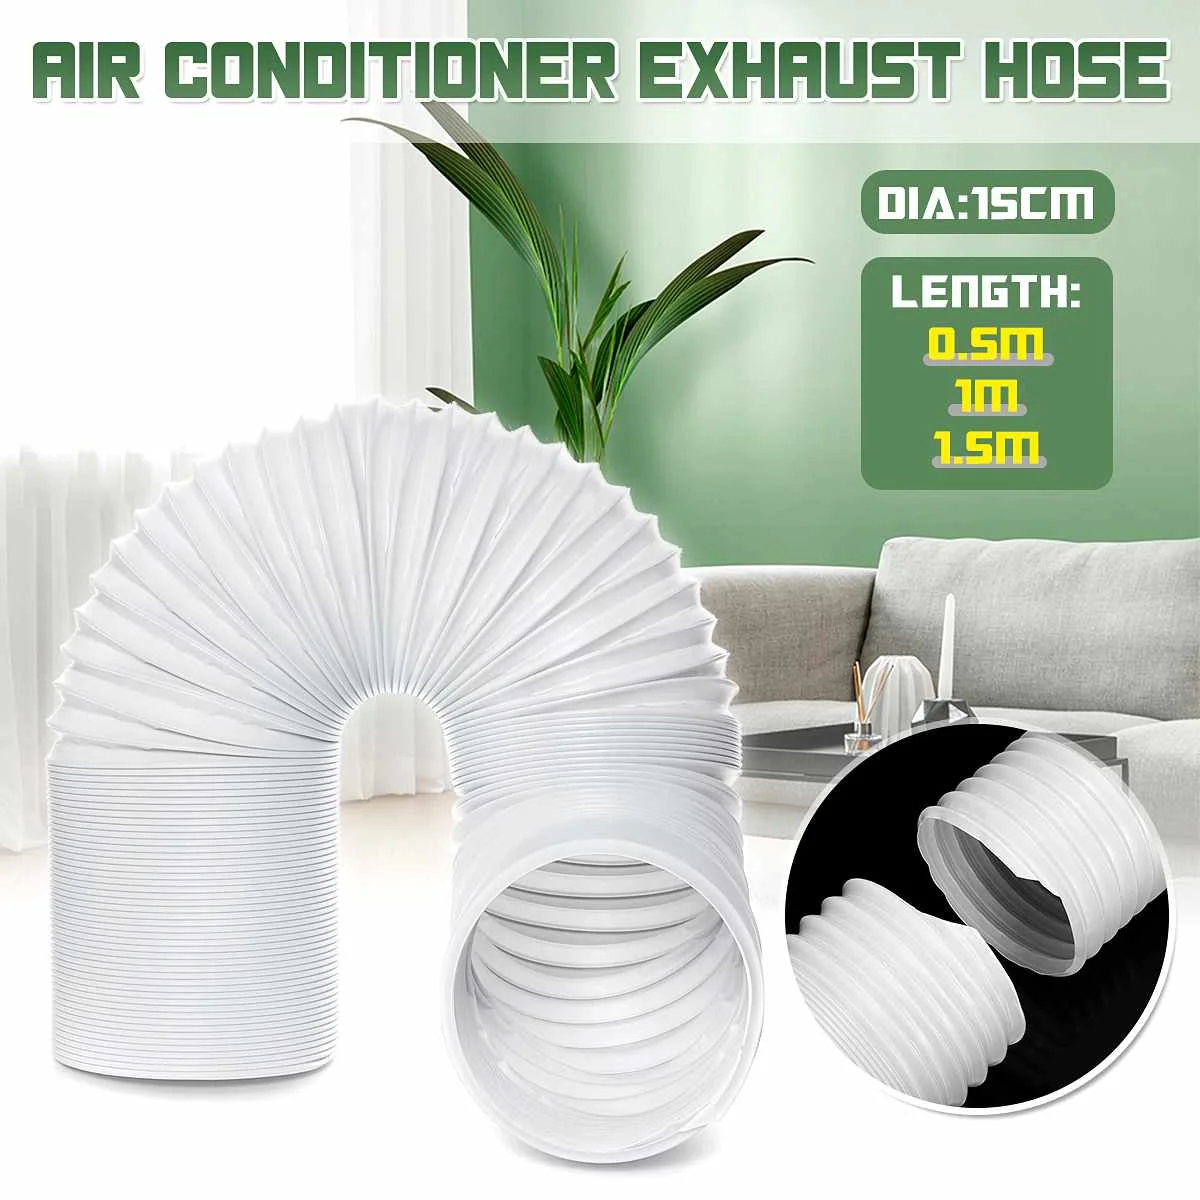 2m/3m/4m Flexible Air Conditioner Exhaust Hose Vent Tube Pipe 150mm Diameter Duct Extension Pipe Air Conditioner Accessories